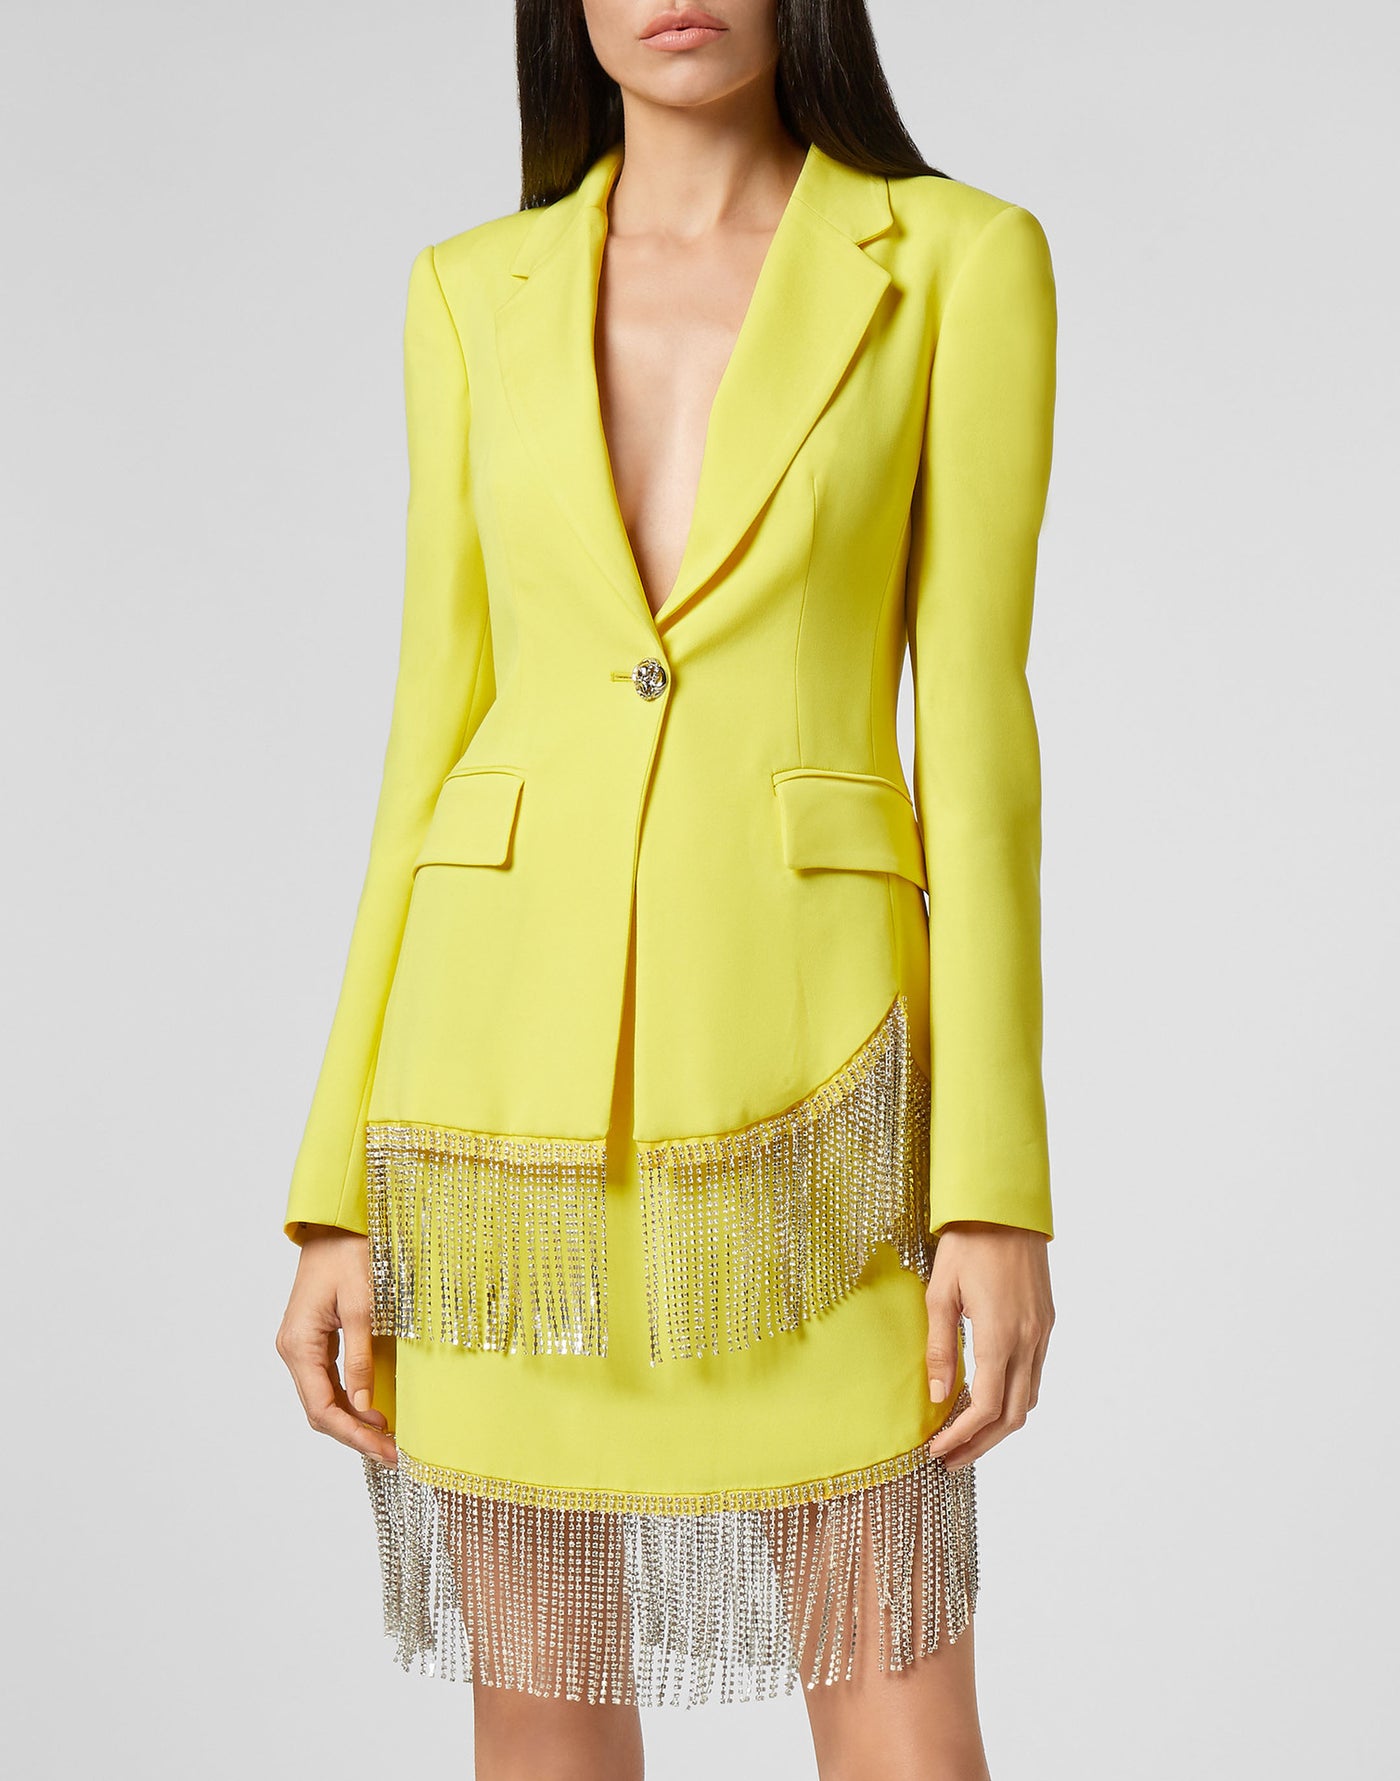 Sophia Full Color Crystal Fringe Blazer Suit - Hot fashionista